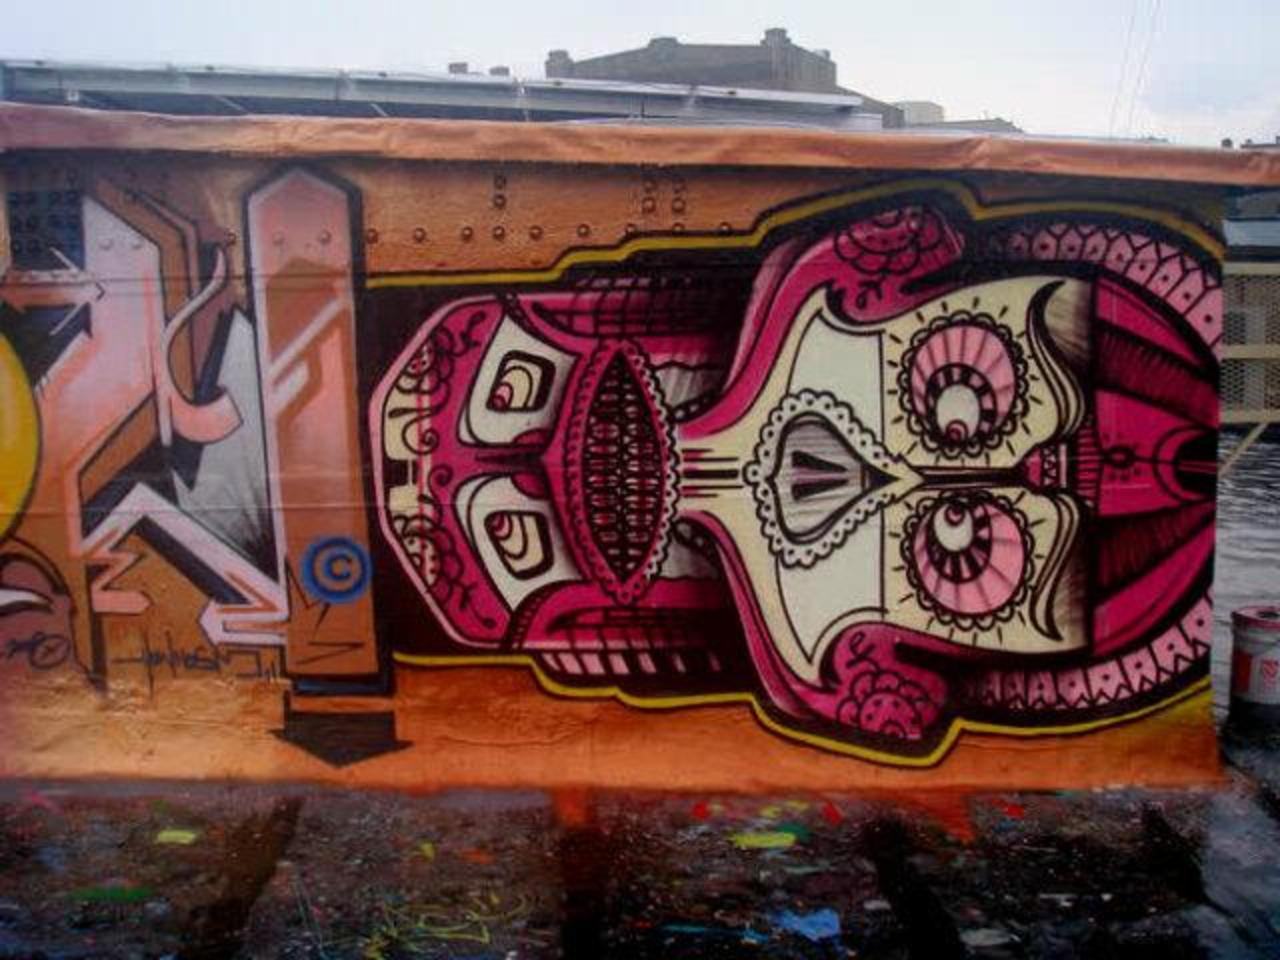 Ooooh, that voodoo that you do.. • #streetart #graffiti #art #funky #psyche #dope . : http://t.co/oq9rCqJomD